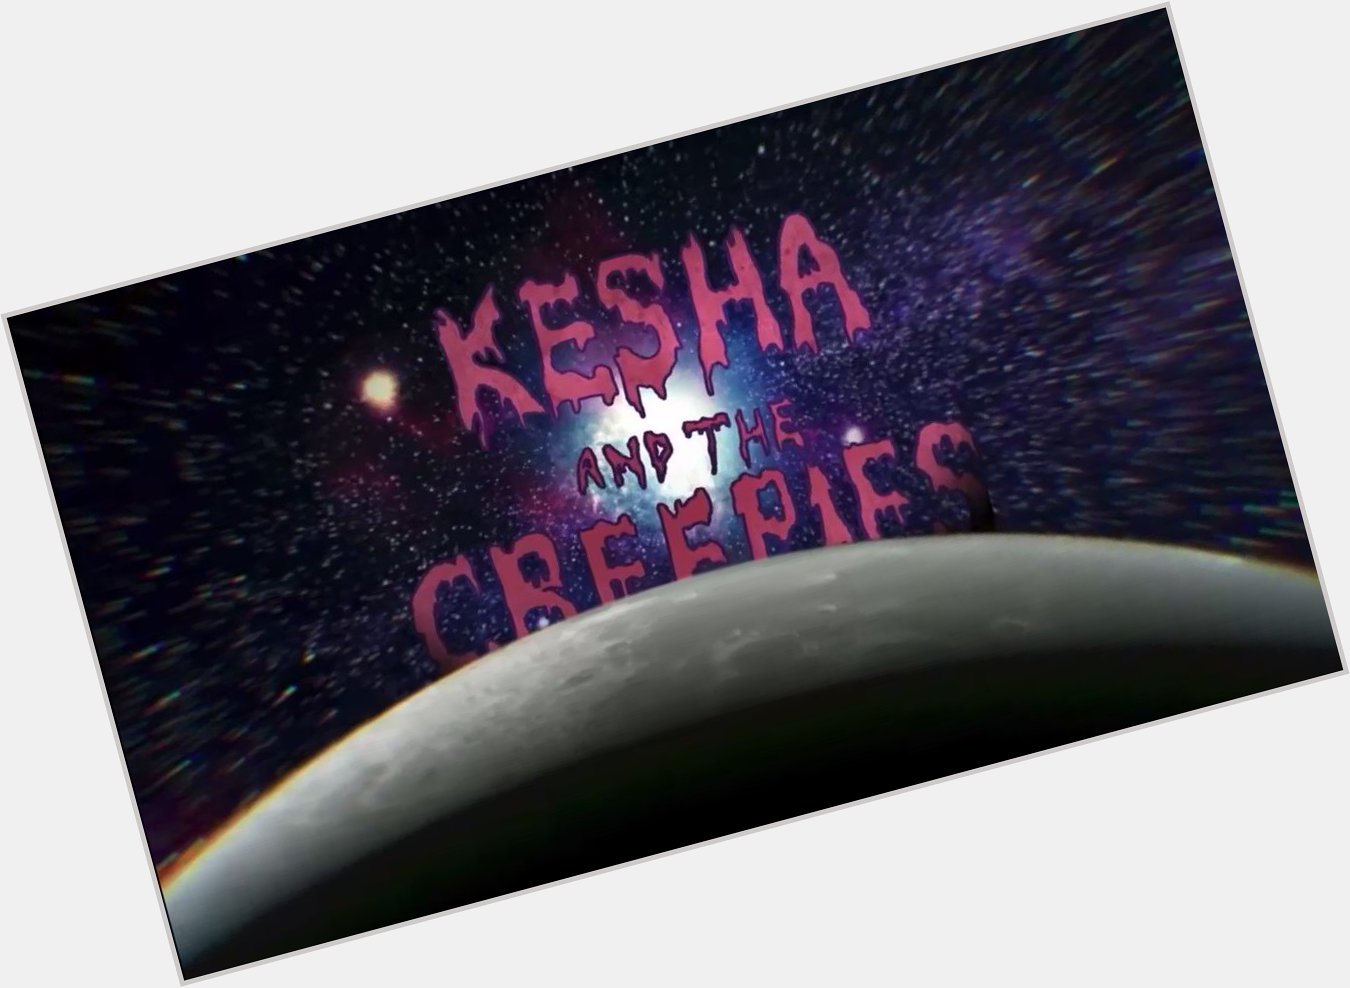  Happy birthday to the insanely talented, Kesha! 